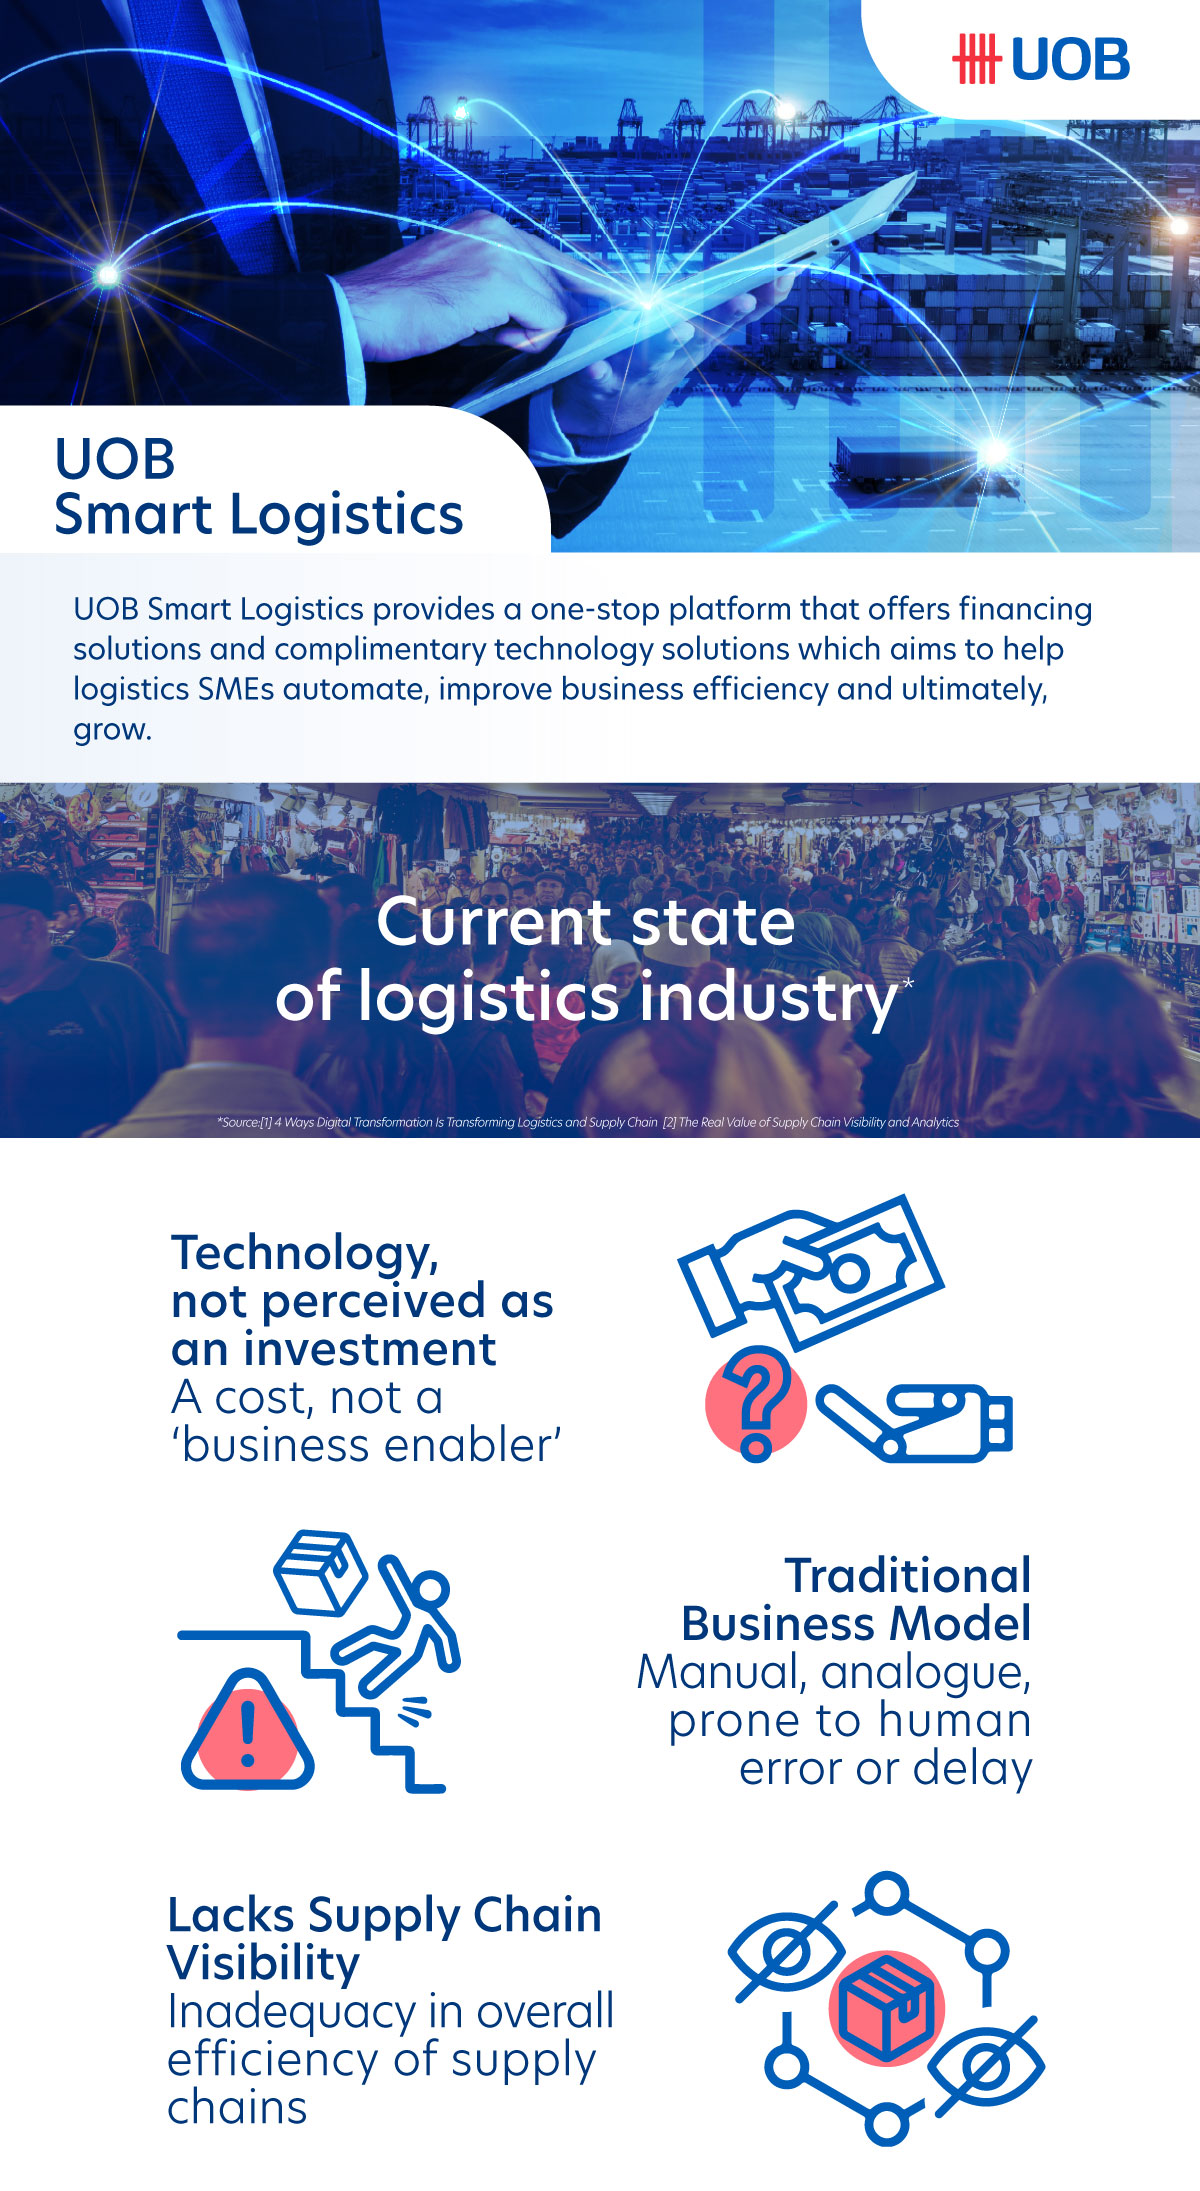 About UOB Smart Logistics